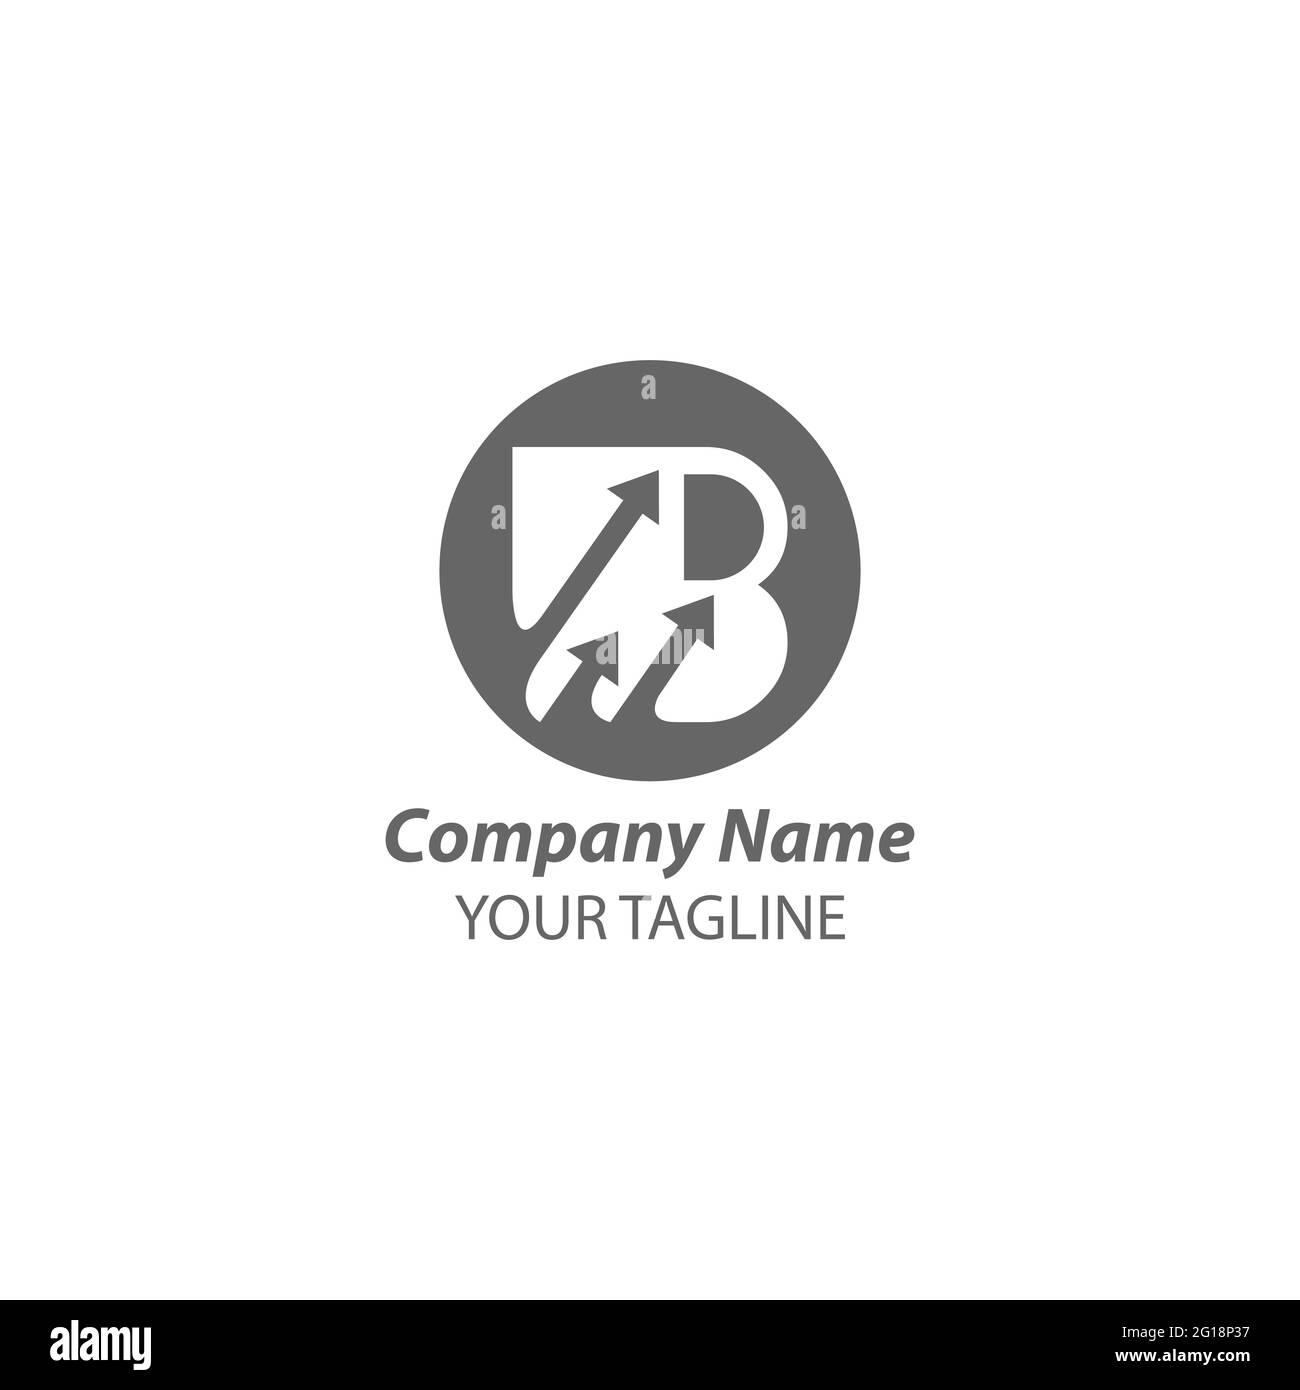 Letter B and arrow logo design vector. Abstract logo design. Type logo for business.EPS 10 Stock Vector